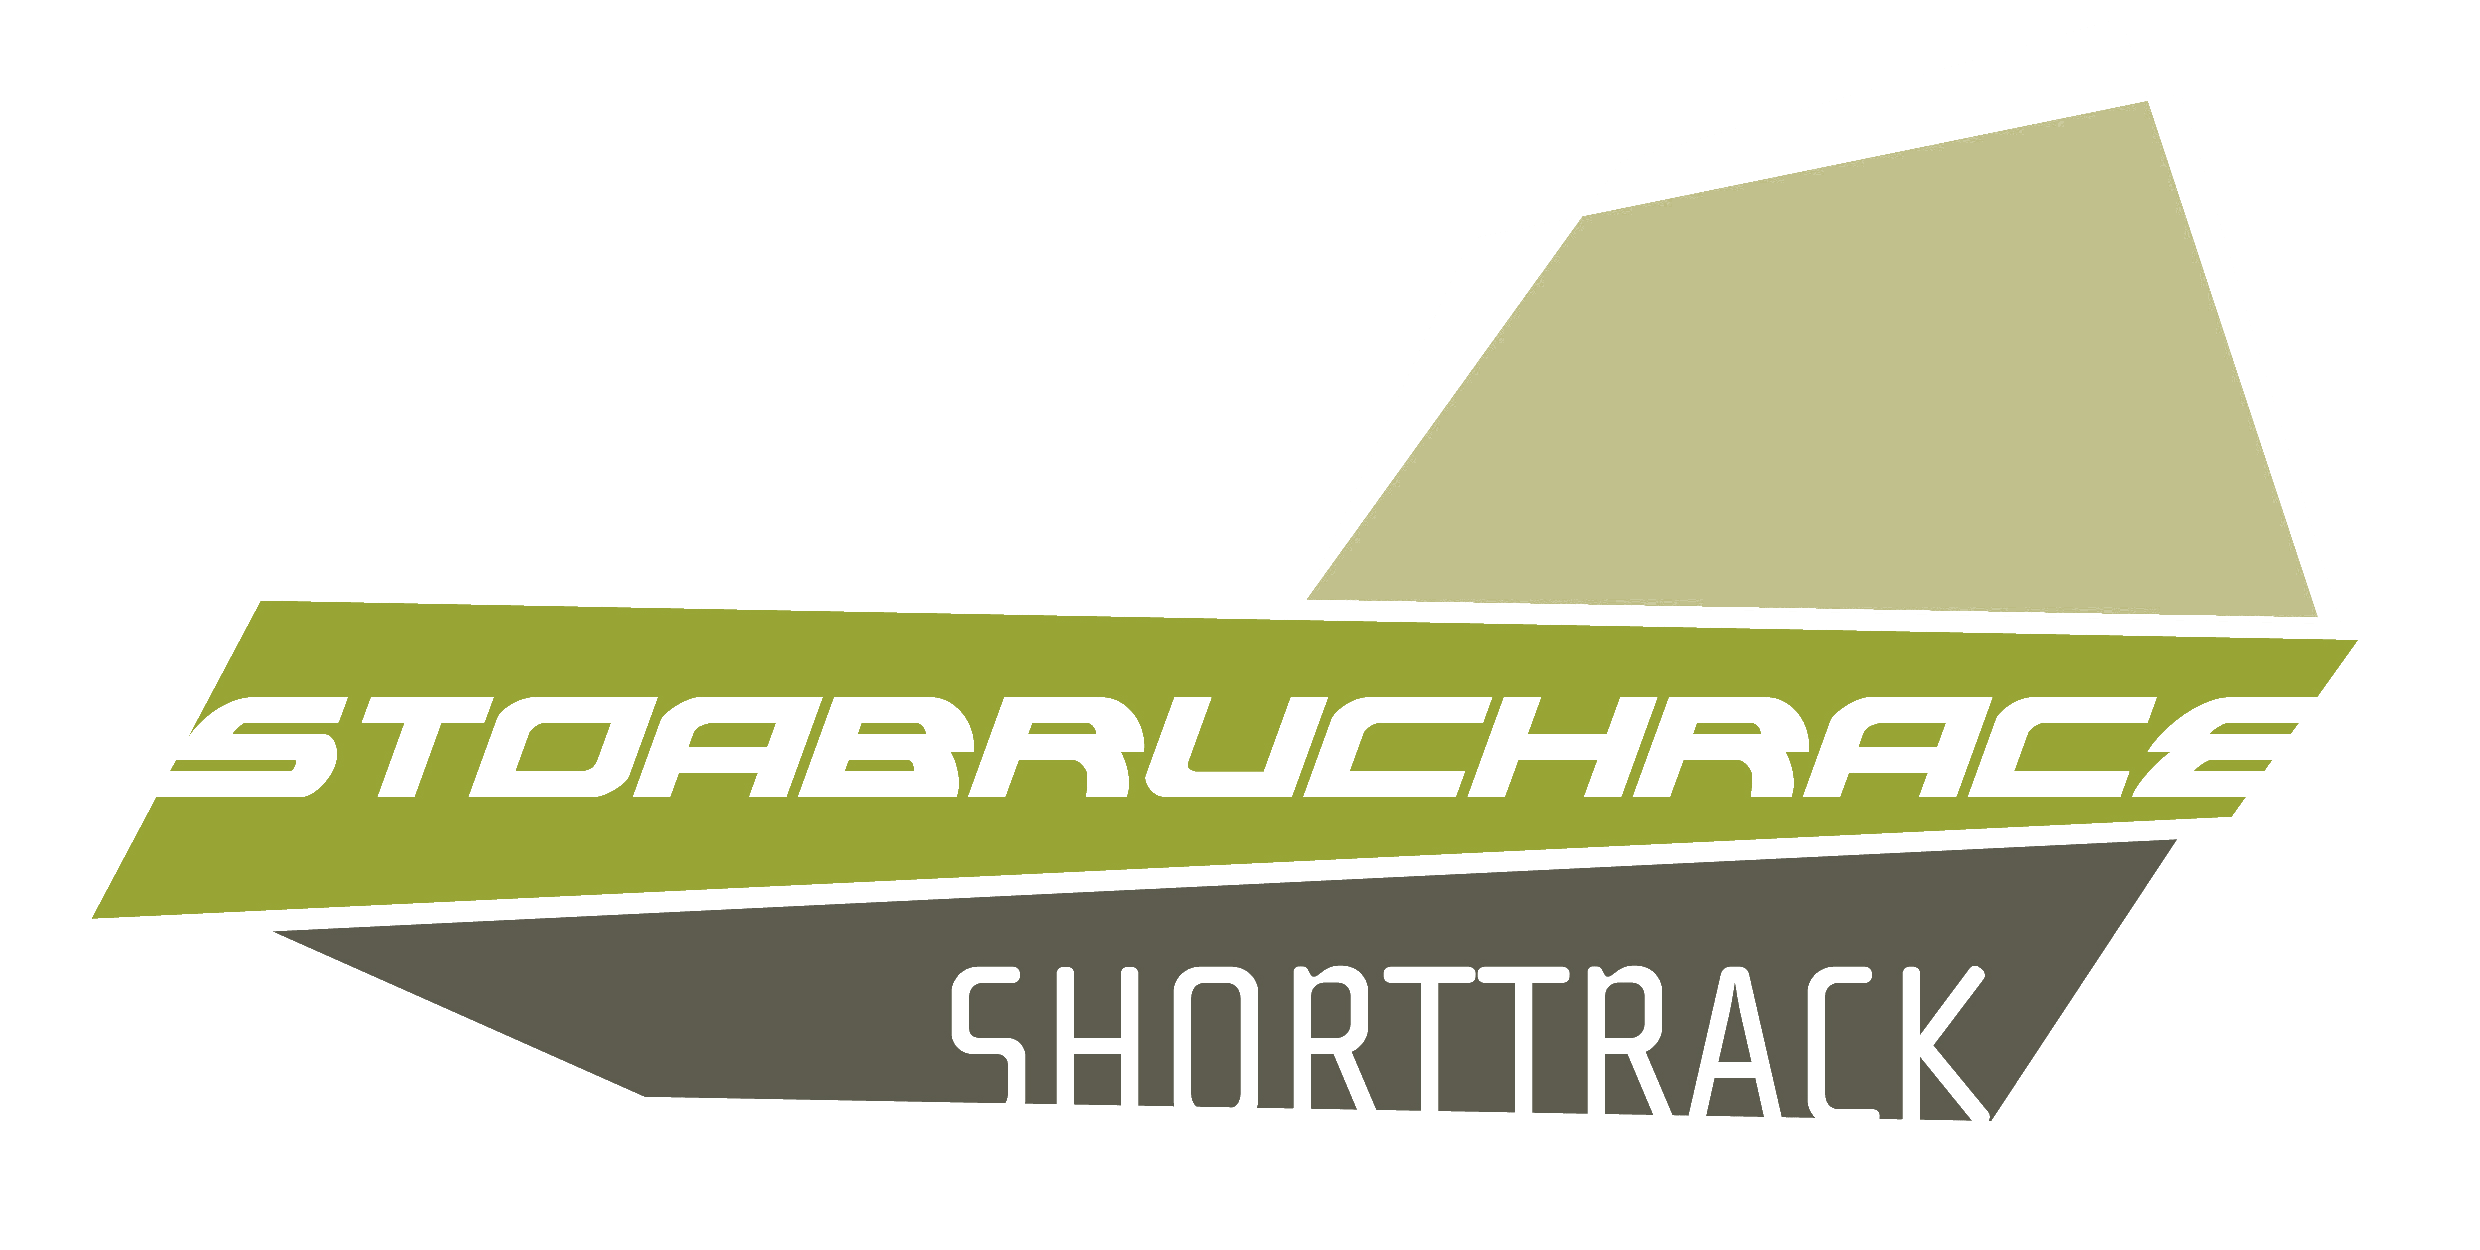 Stoabruchrace